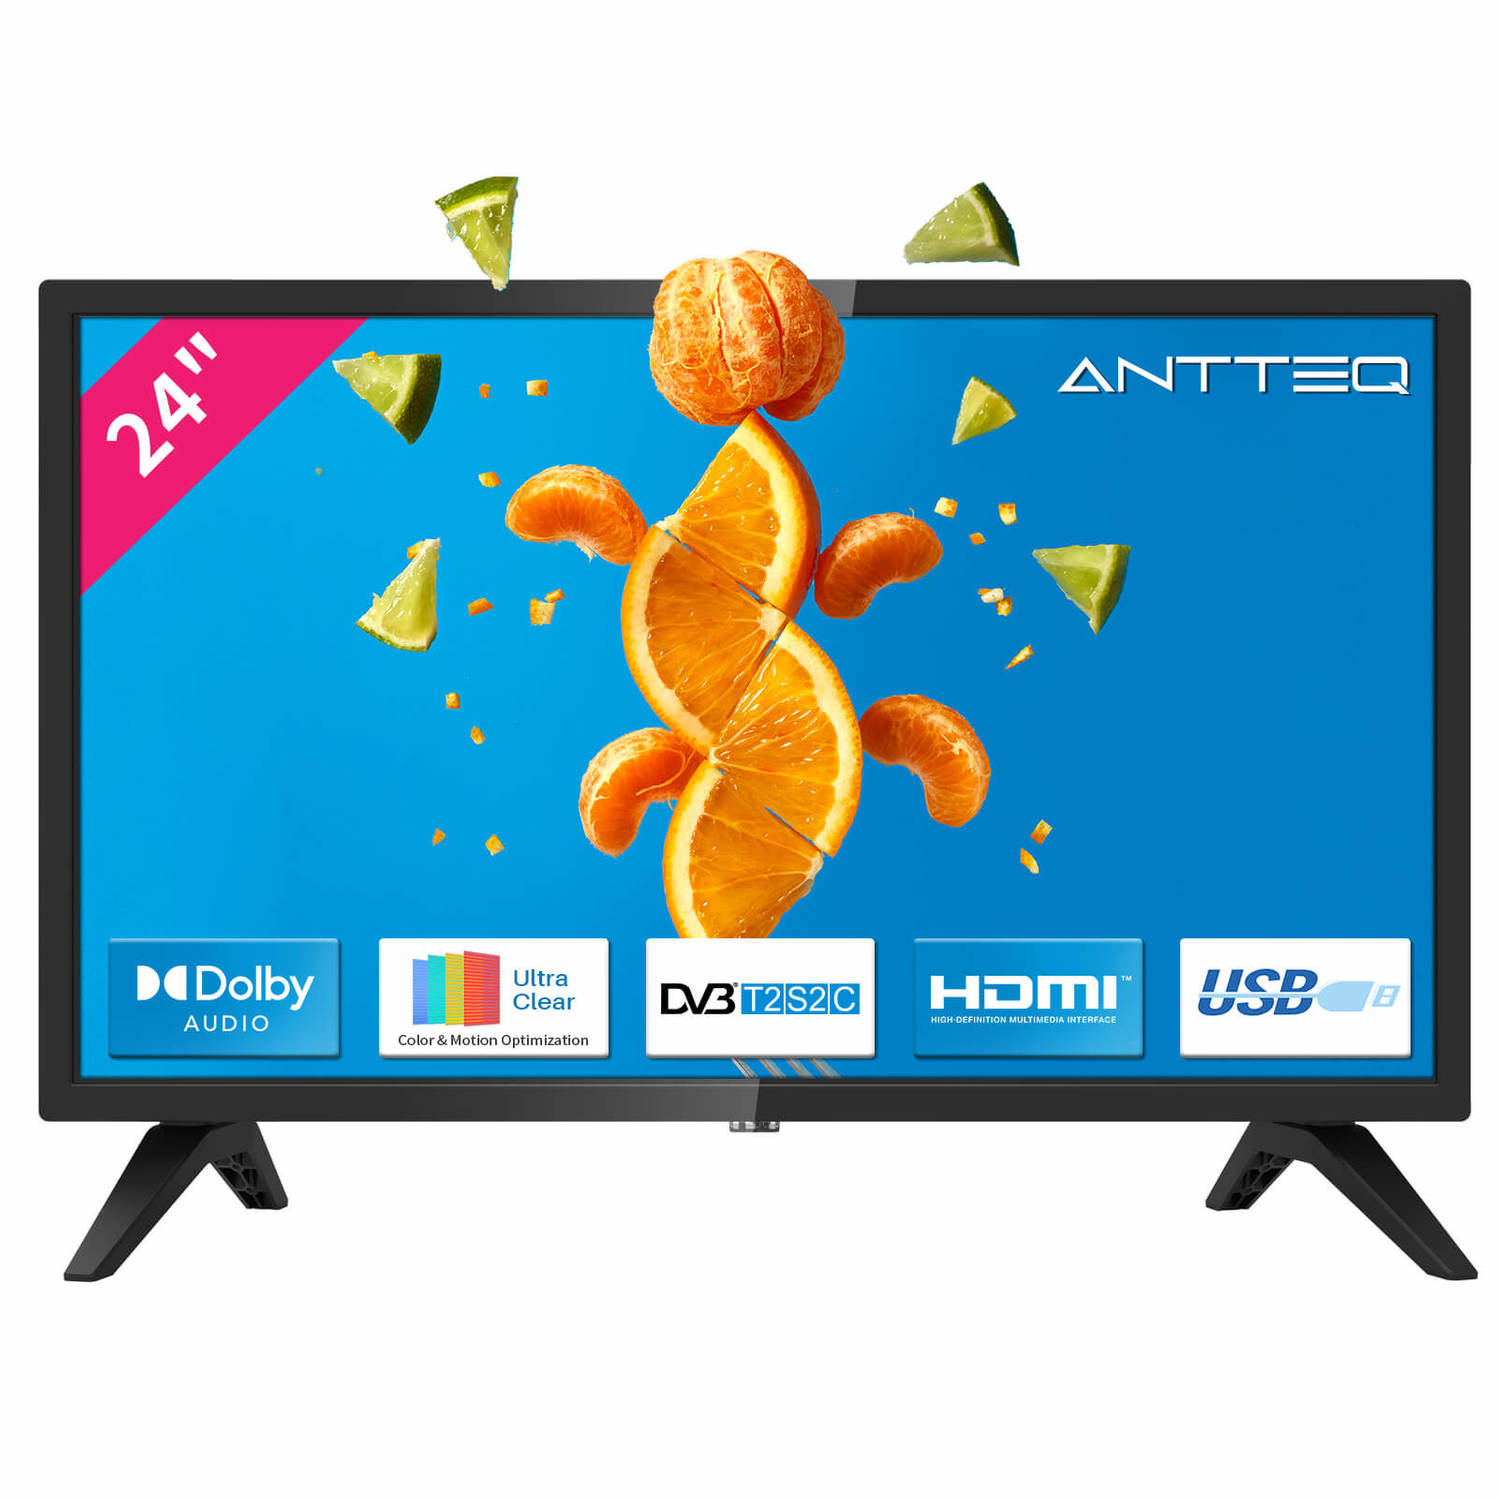 ANTTEQ AB24F1D 24inch HD-ready standaard TV